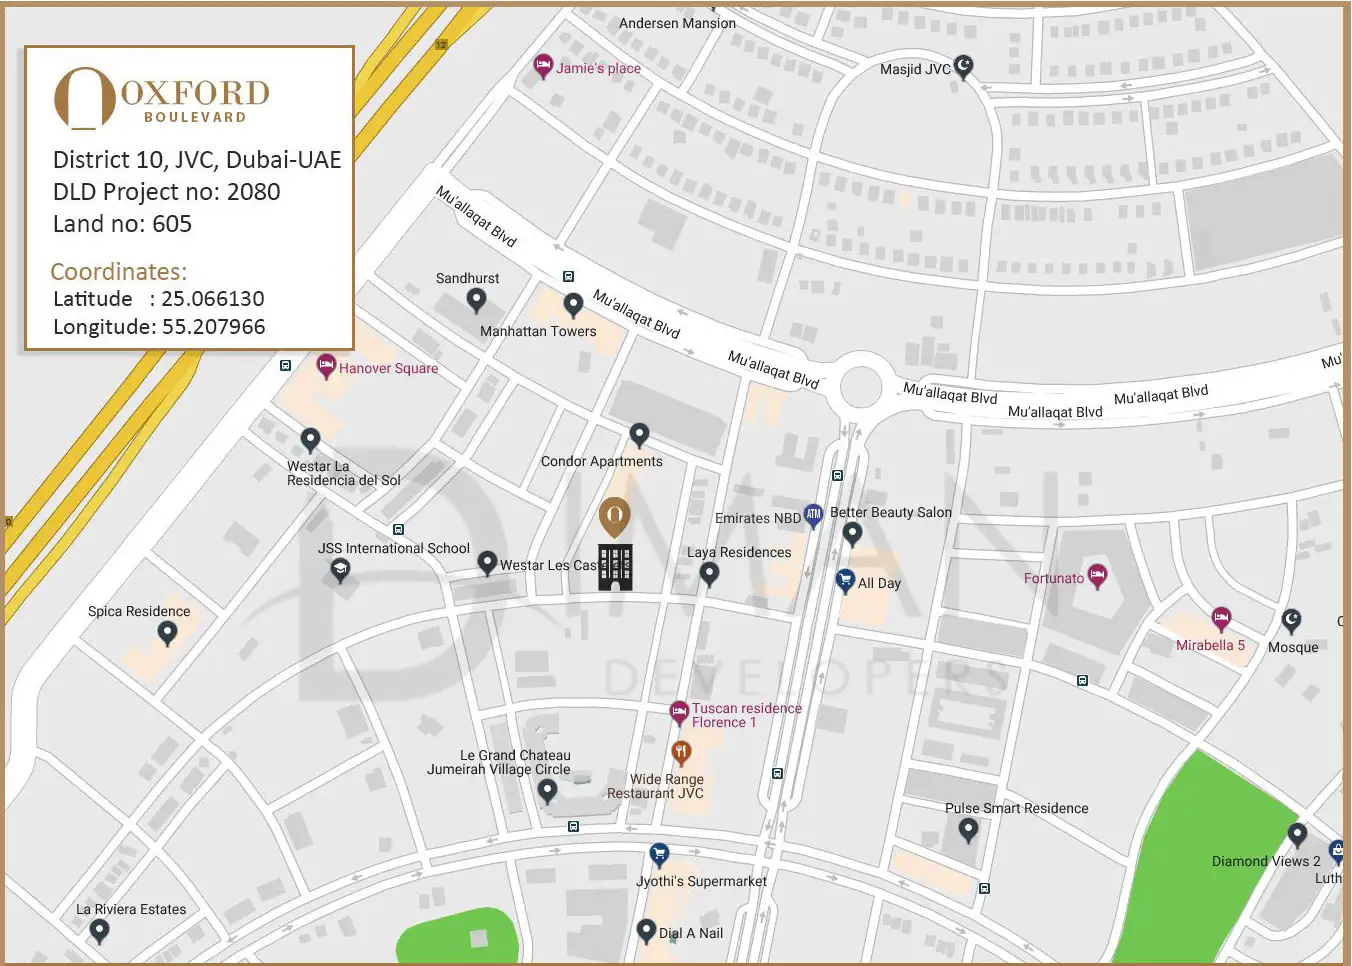 Oxford Boulevard -  Location Plan